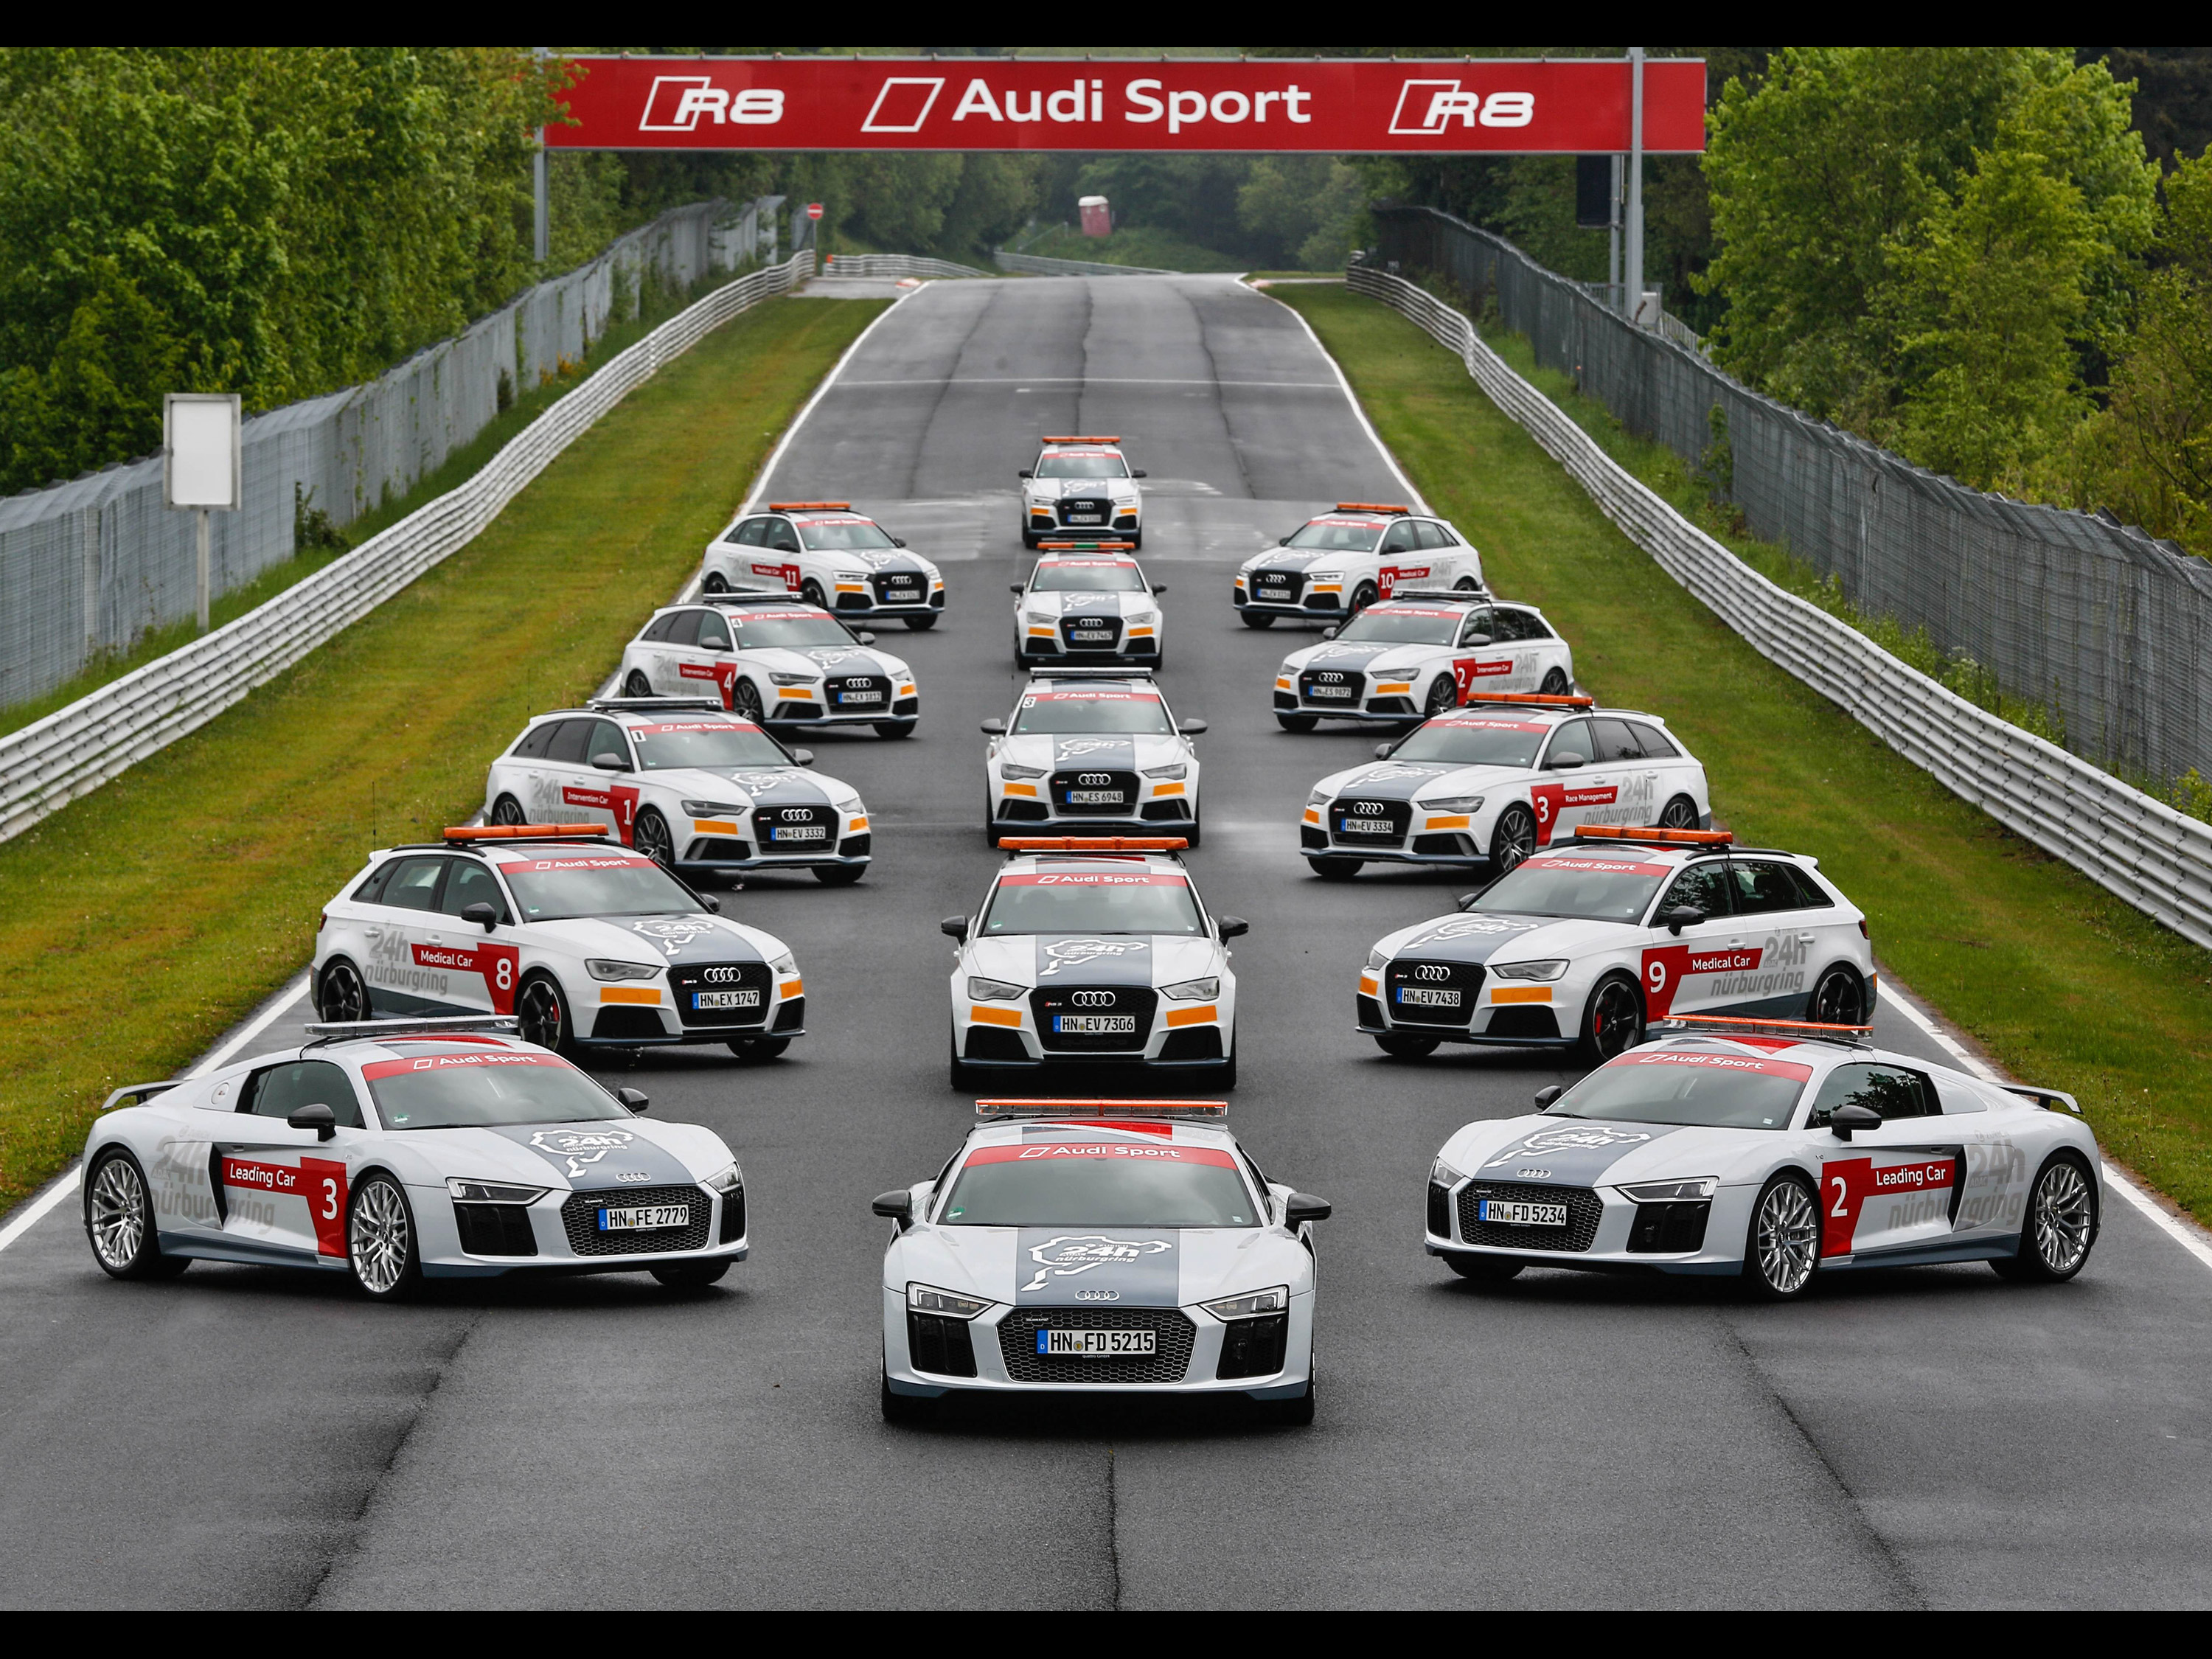 Audi 24h Nurburgring Official Cars 16 アウディに嵌まる 壁紙画像ブログ